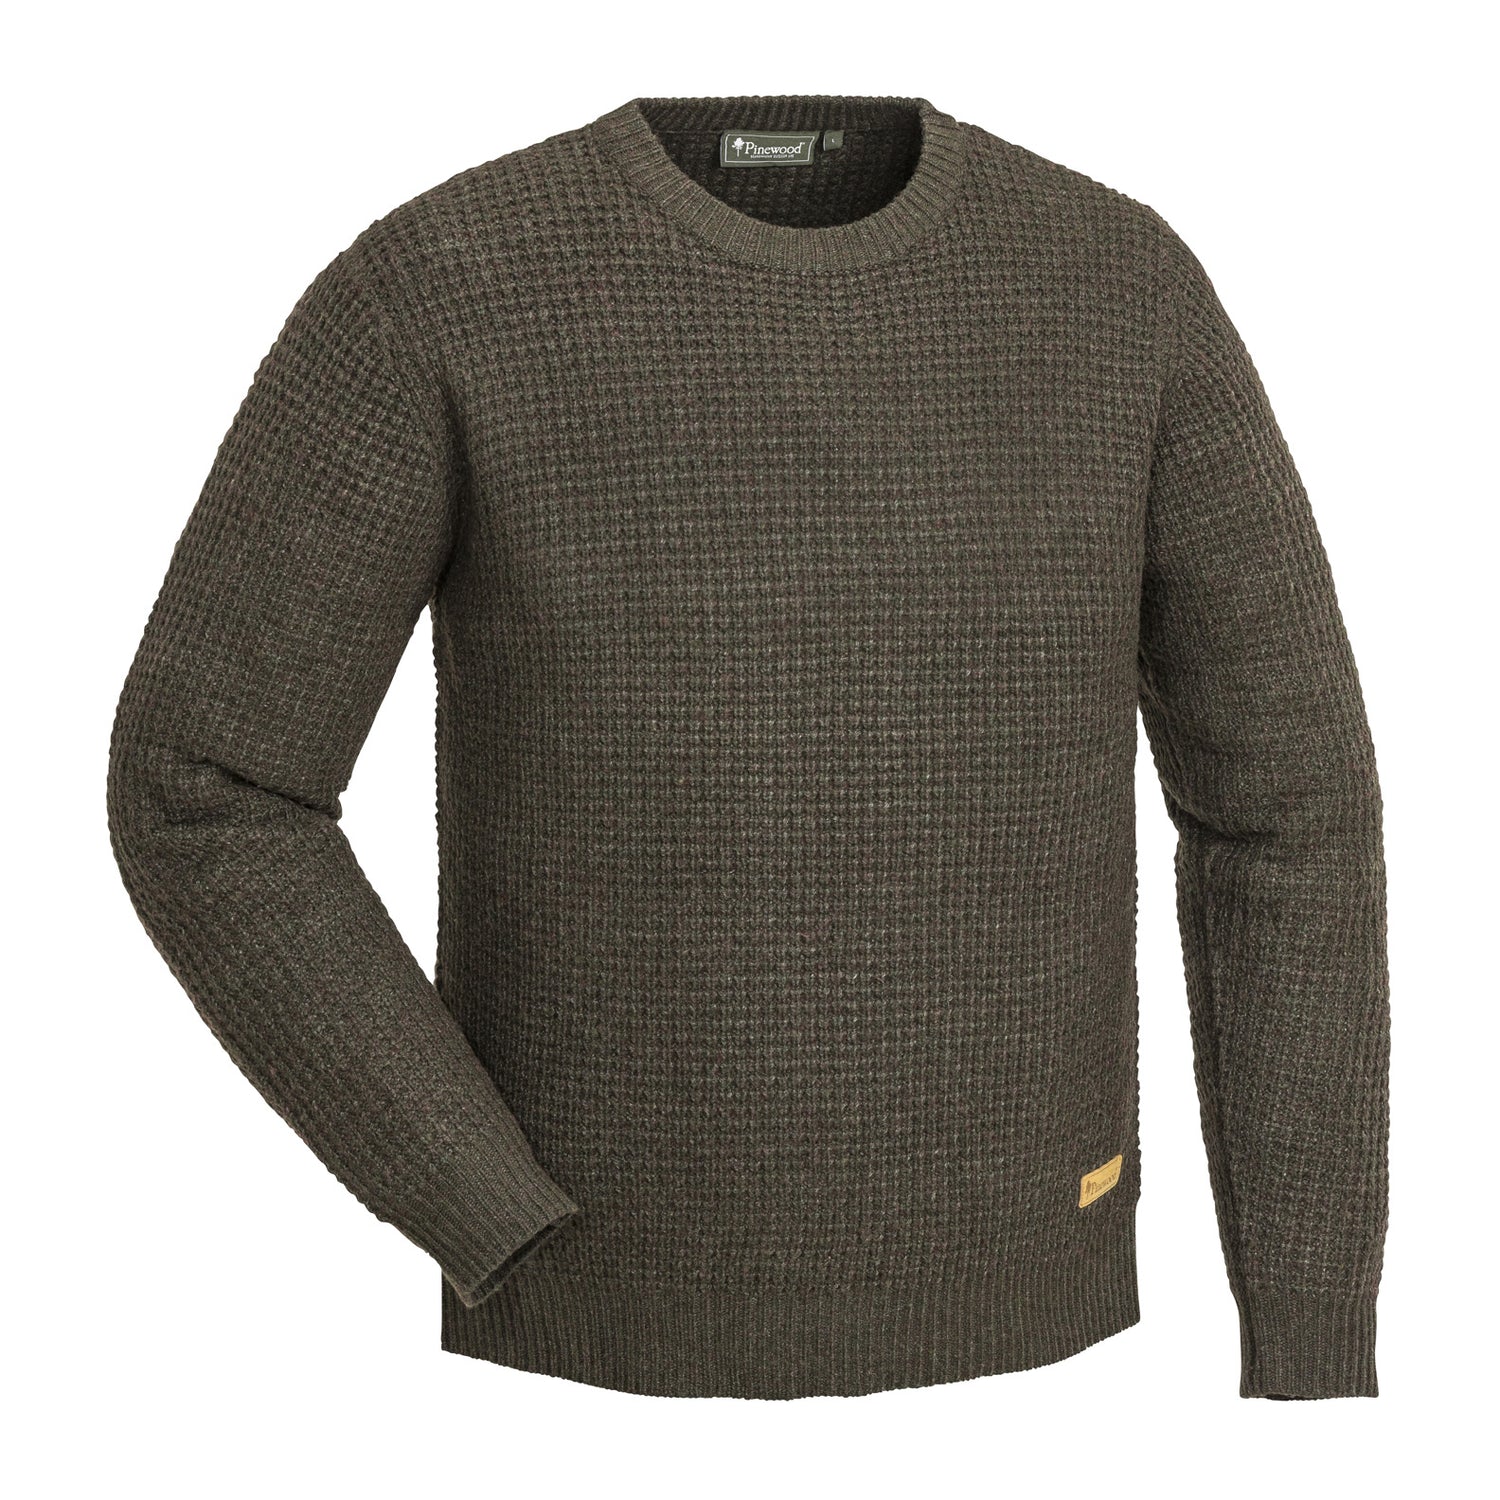 Pinewood-Ralf-Knitted-Sweater